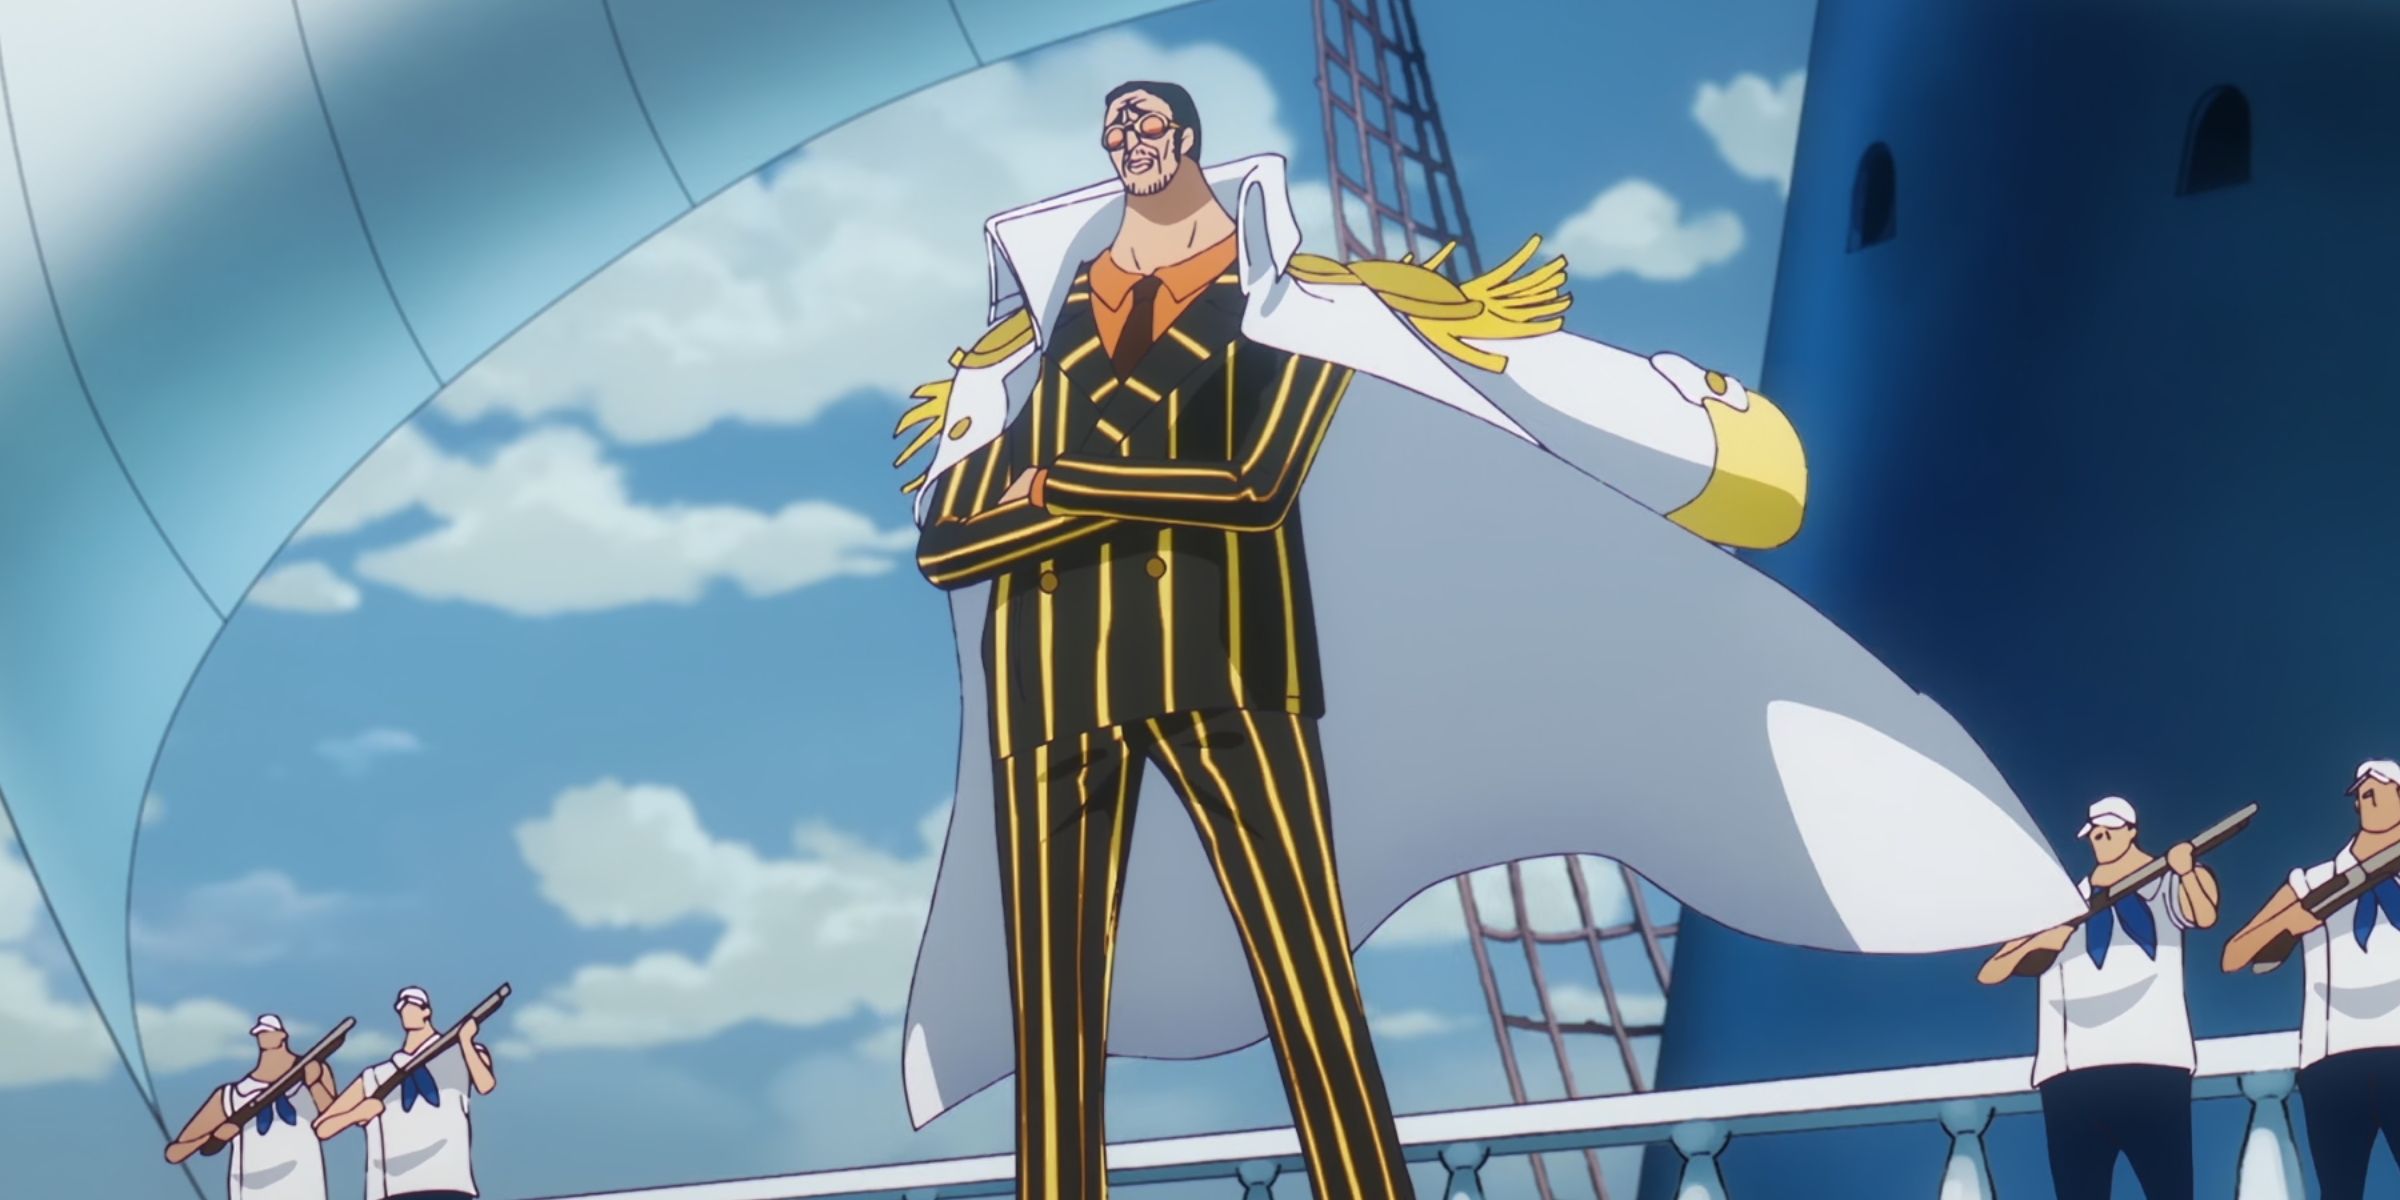 Admiral Kizaru from One Piece